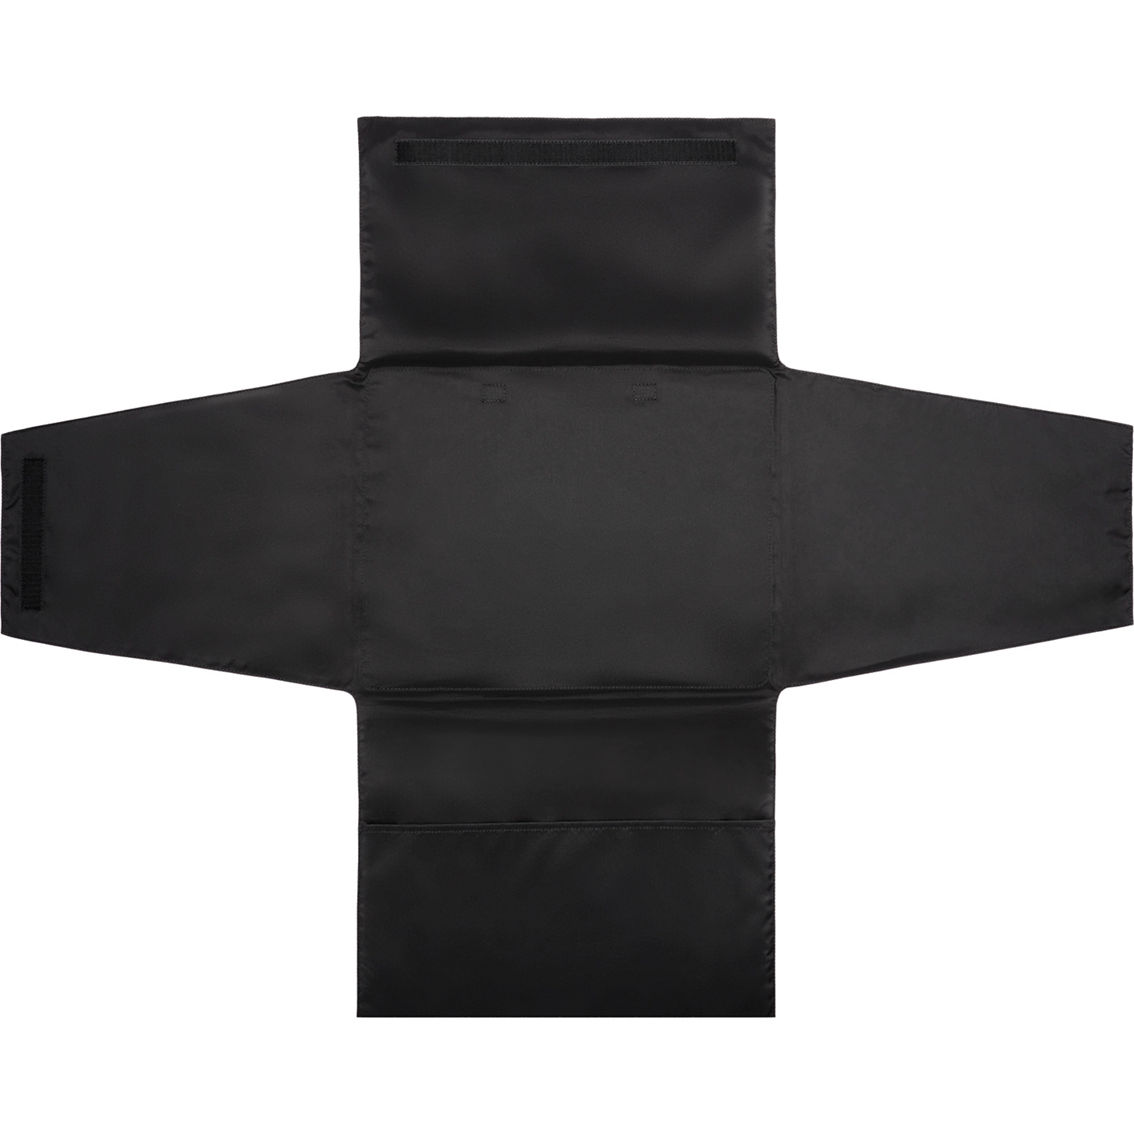 Briggs & Riley Travel Essentials Garment Folder Black - Image 2 of 4